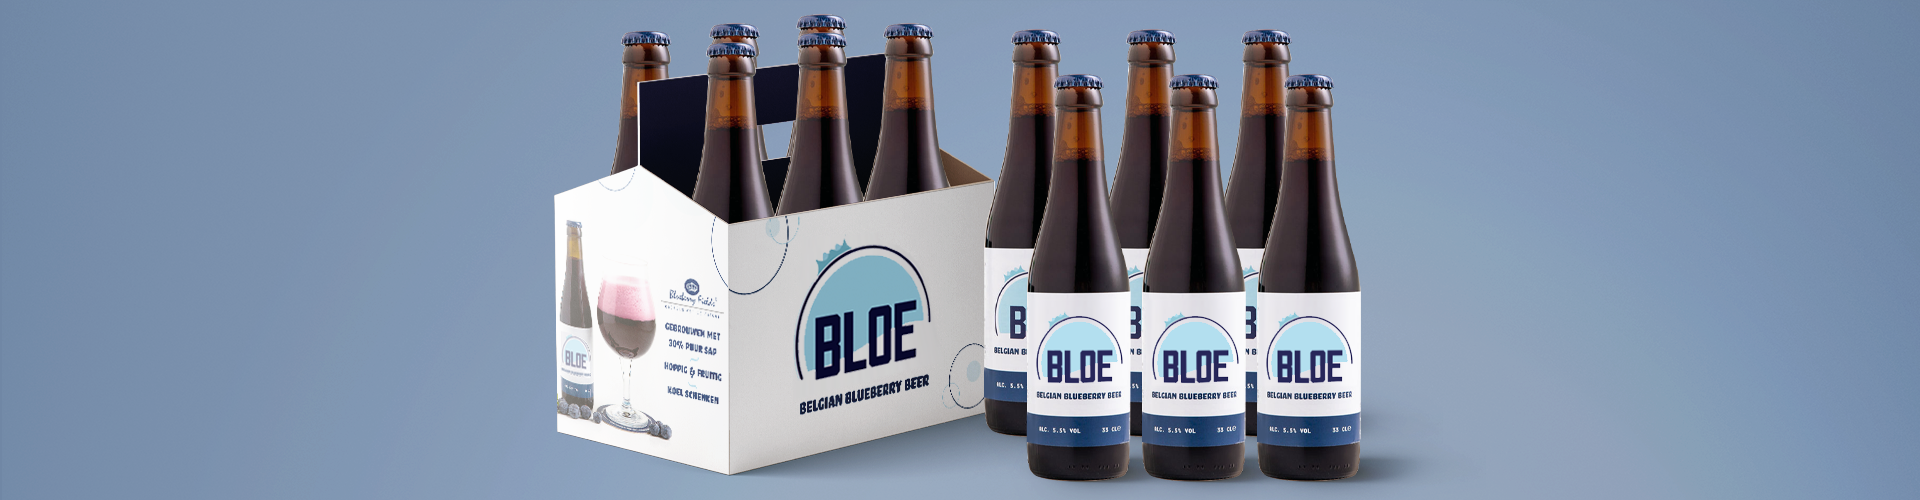 Bloe Blauwbessen Bier